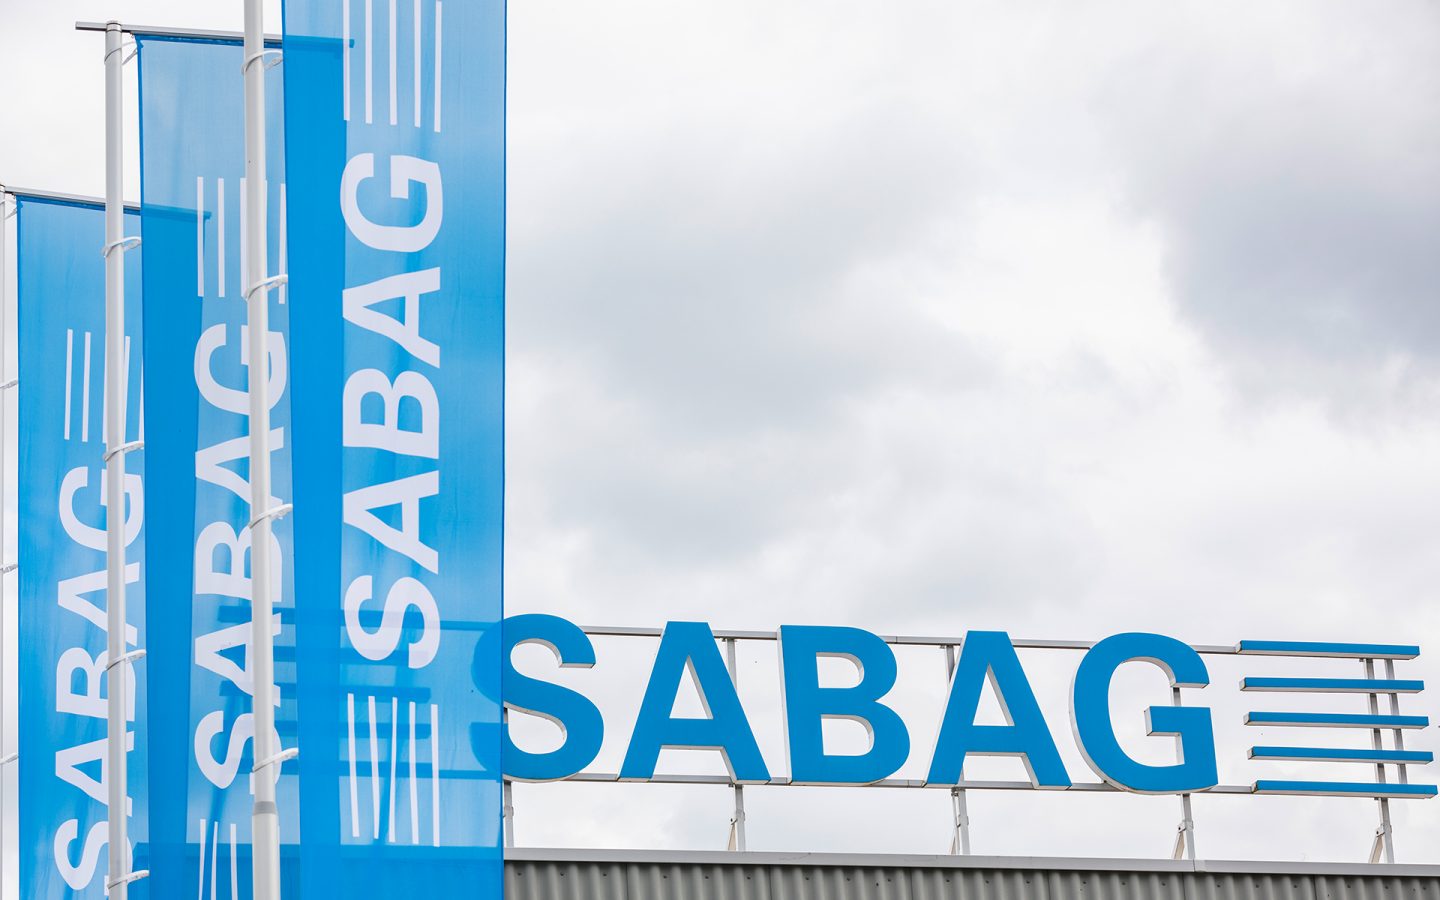 Firmengebäude, Schriftzug und Fahnen der Sabag Holding AG